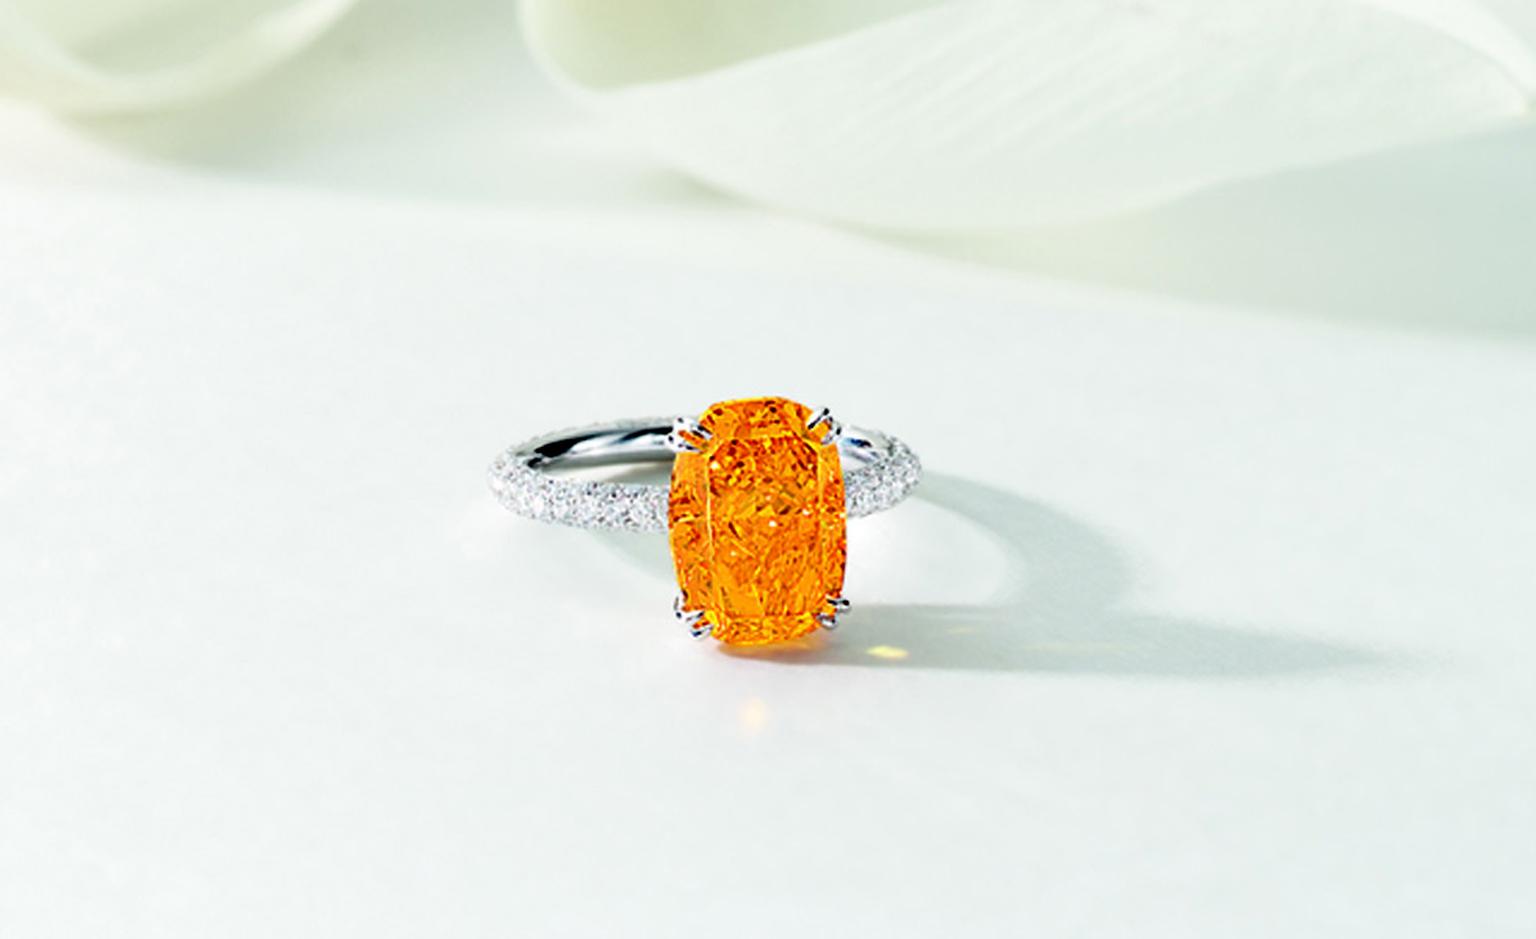 LOT 2669. Very rare and exquisite fancy vivid orange diamond ring. EST 19,000,000 - 23,000,000 HKD. LOT SOLD 23,060,000 HKD